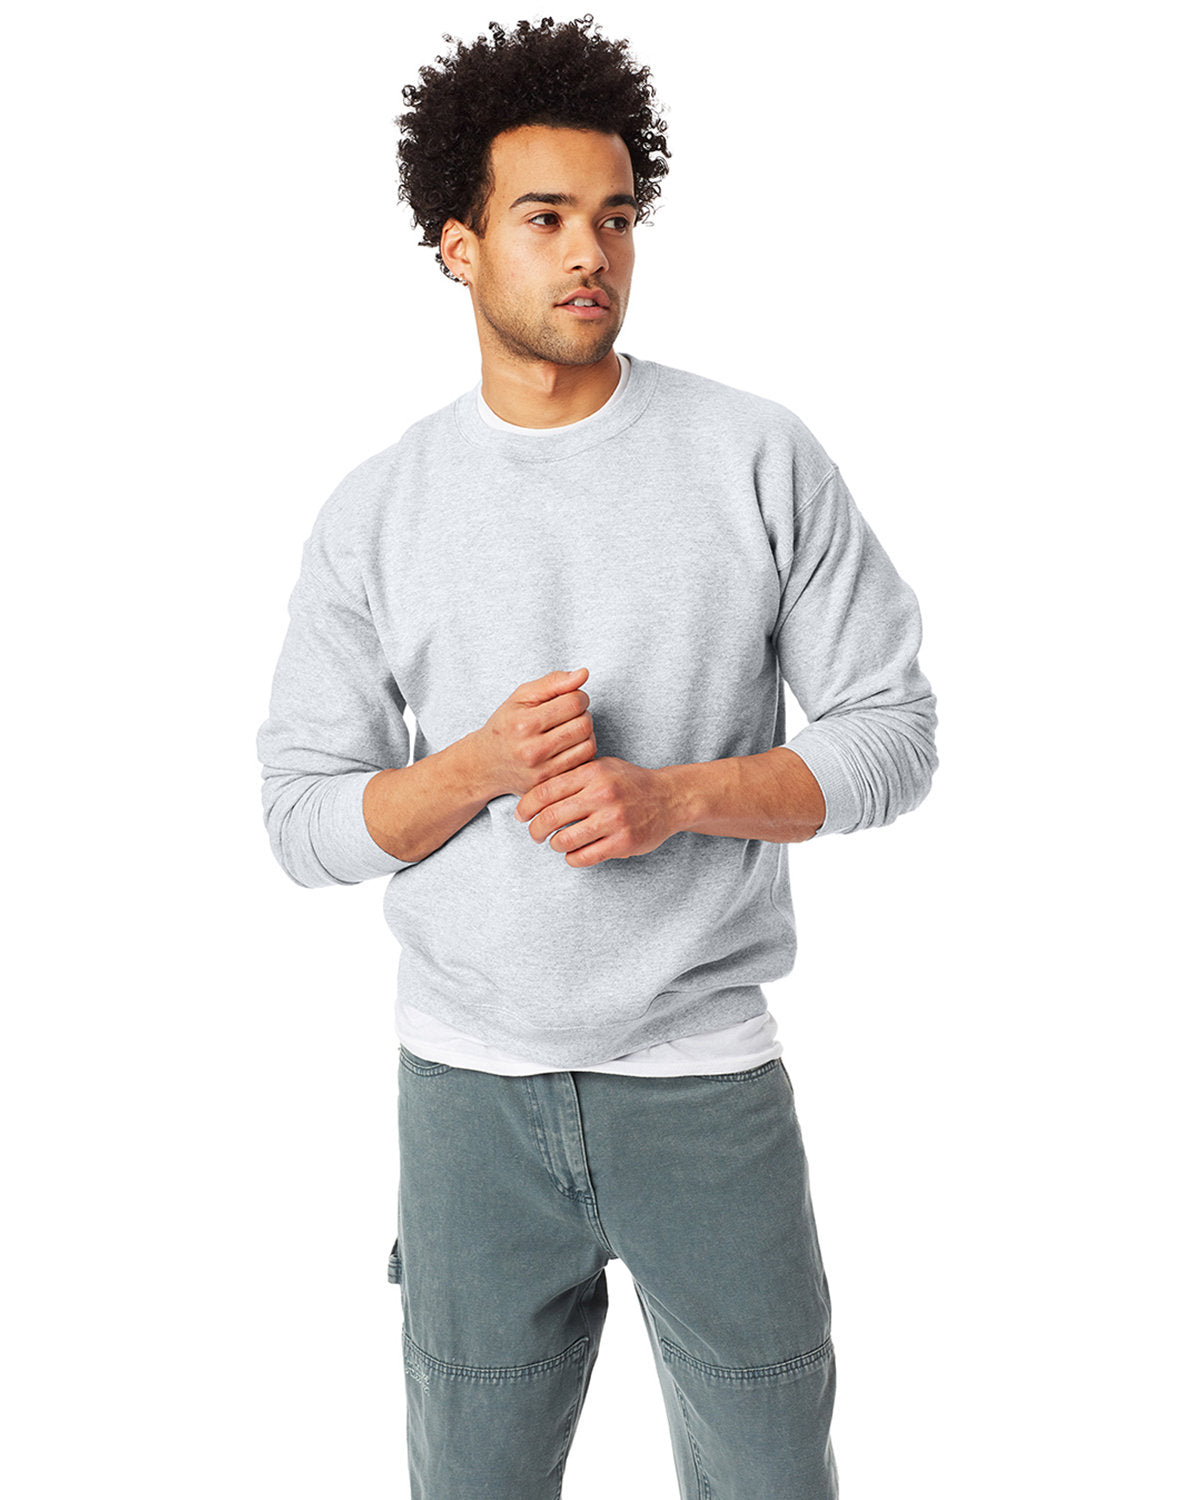 Embroidered Comfy Everyday Sweatshirt